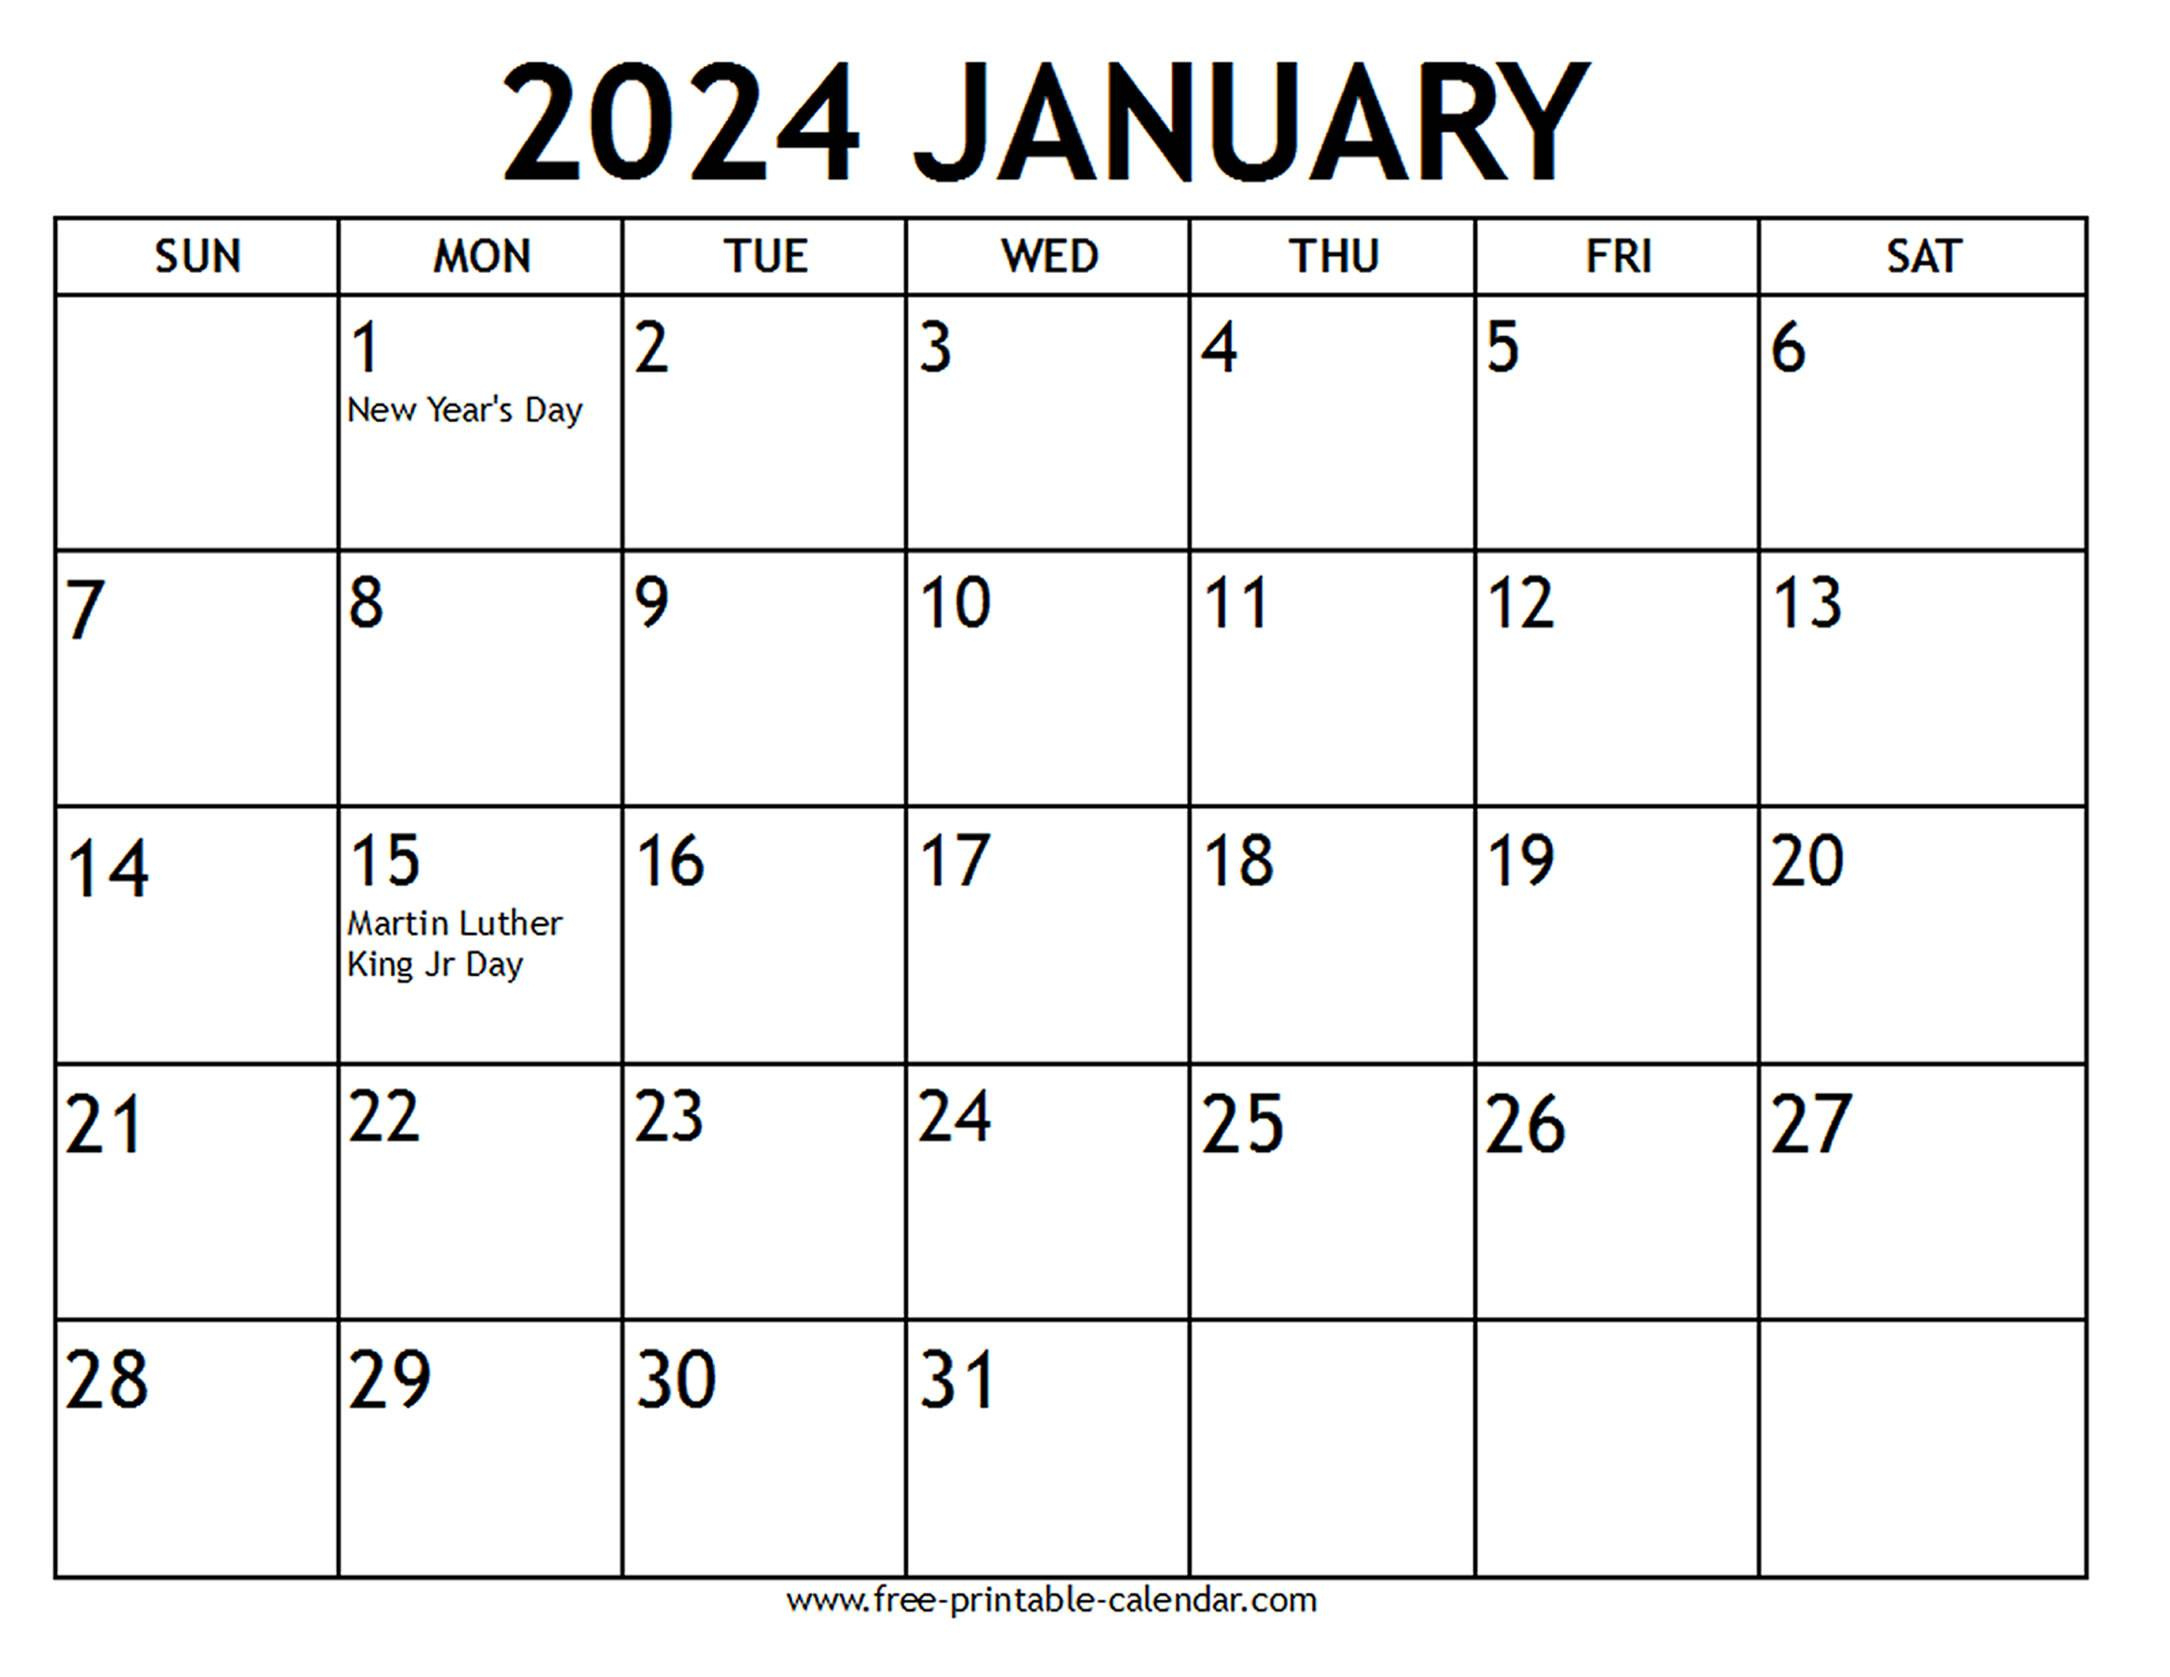 January 2024 Calendar Us Holidays - Free-Printable-Calendar inside Free Printable Calendar 2024 By Month With Us Holidays